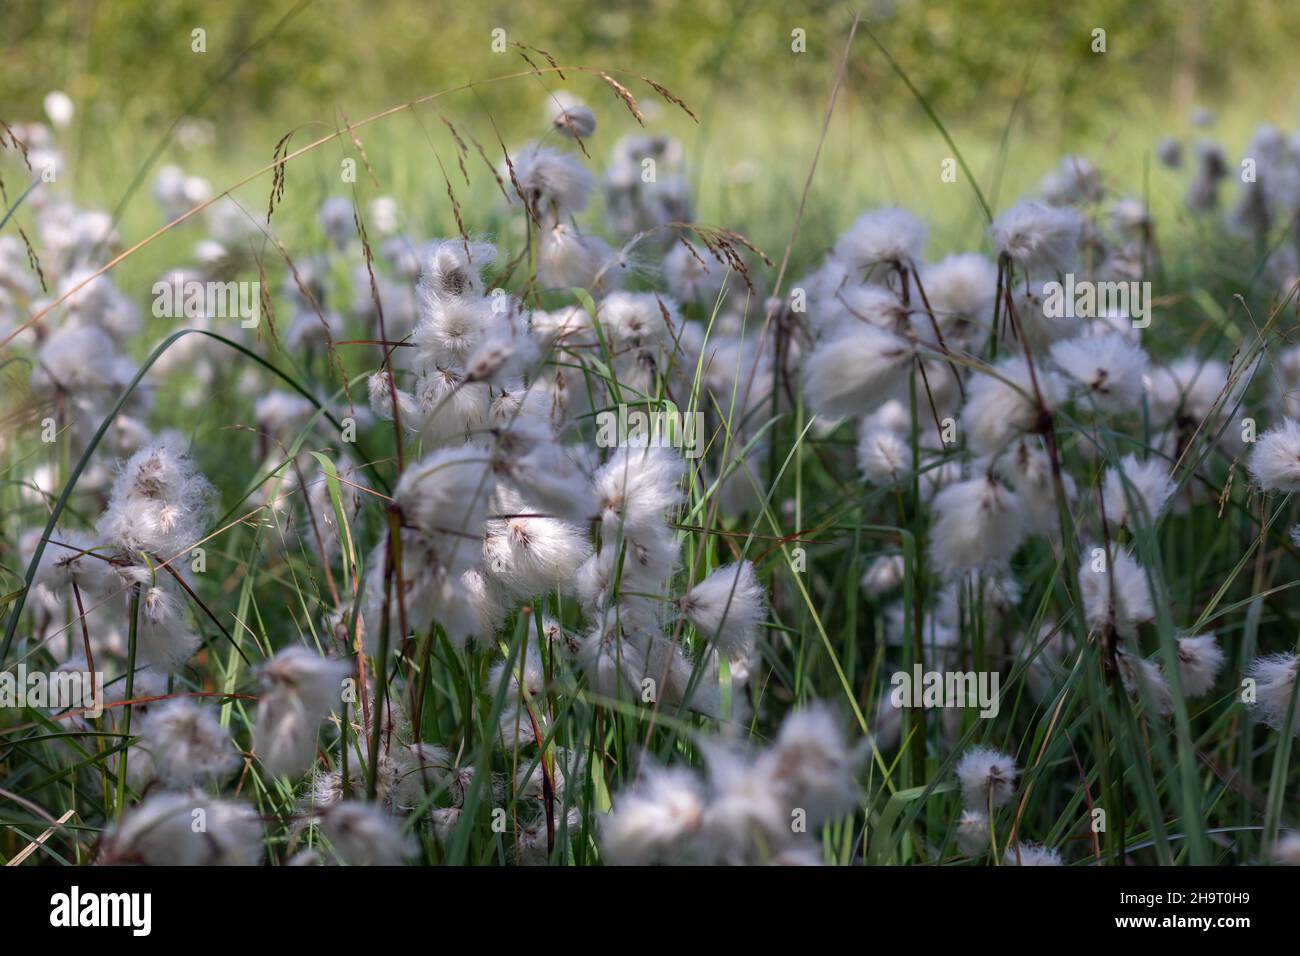 Eriophorum, cottongrass plants in the meadow Stock Photo